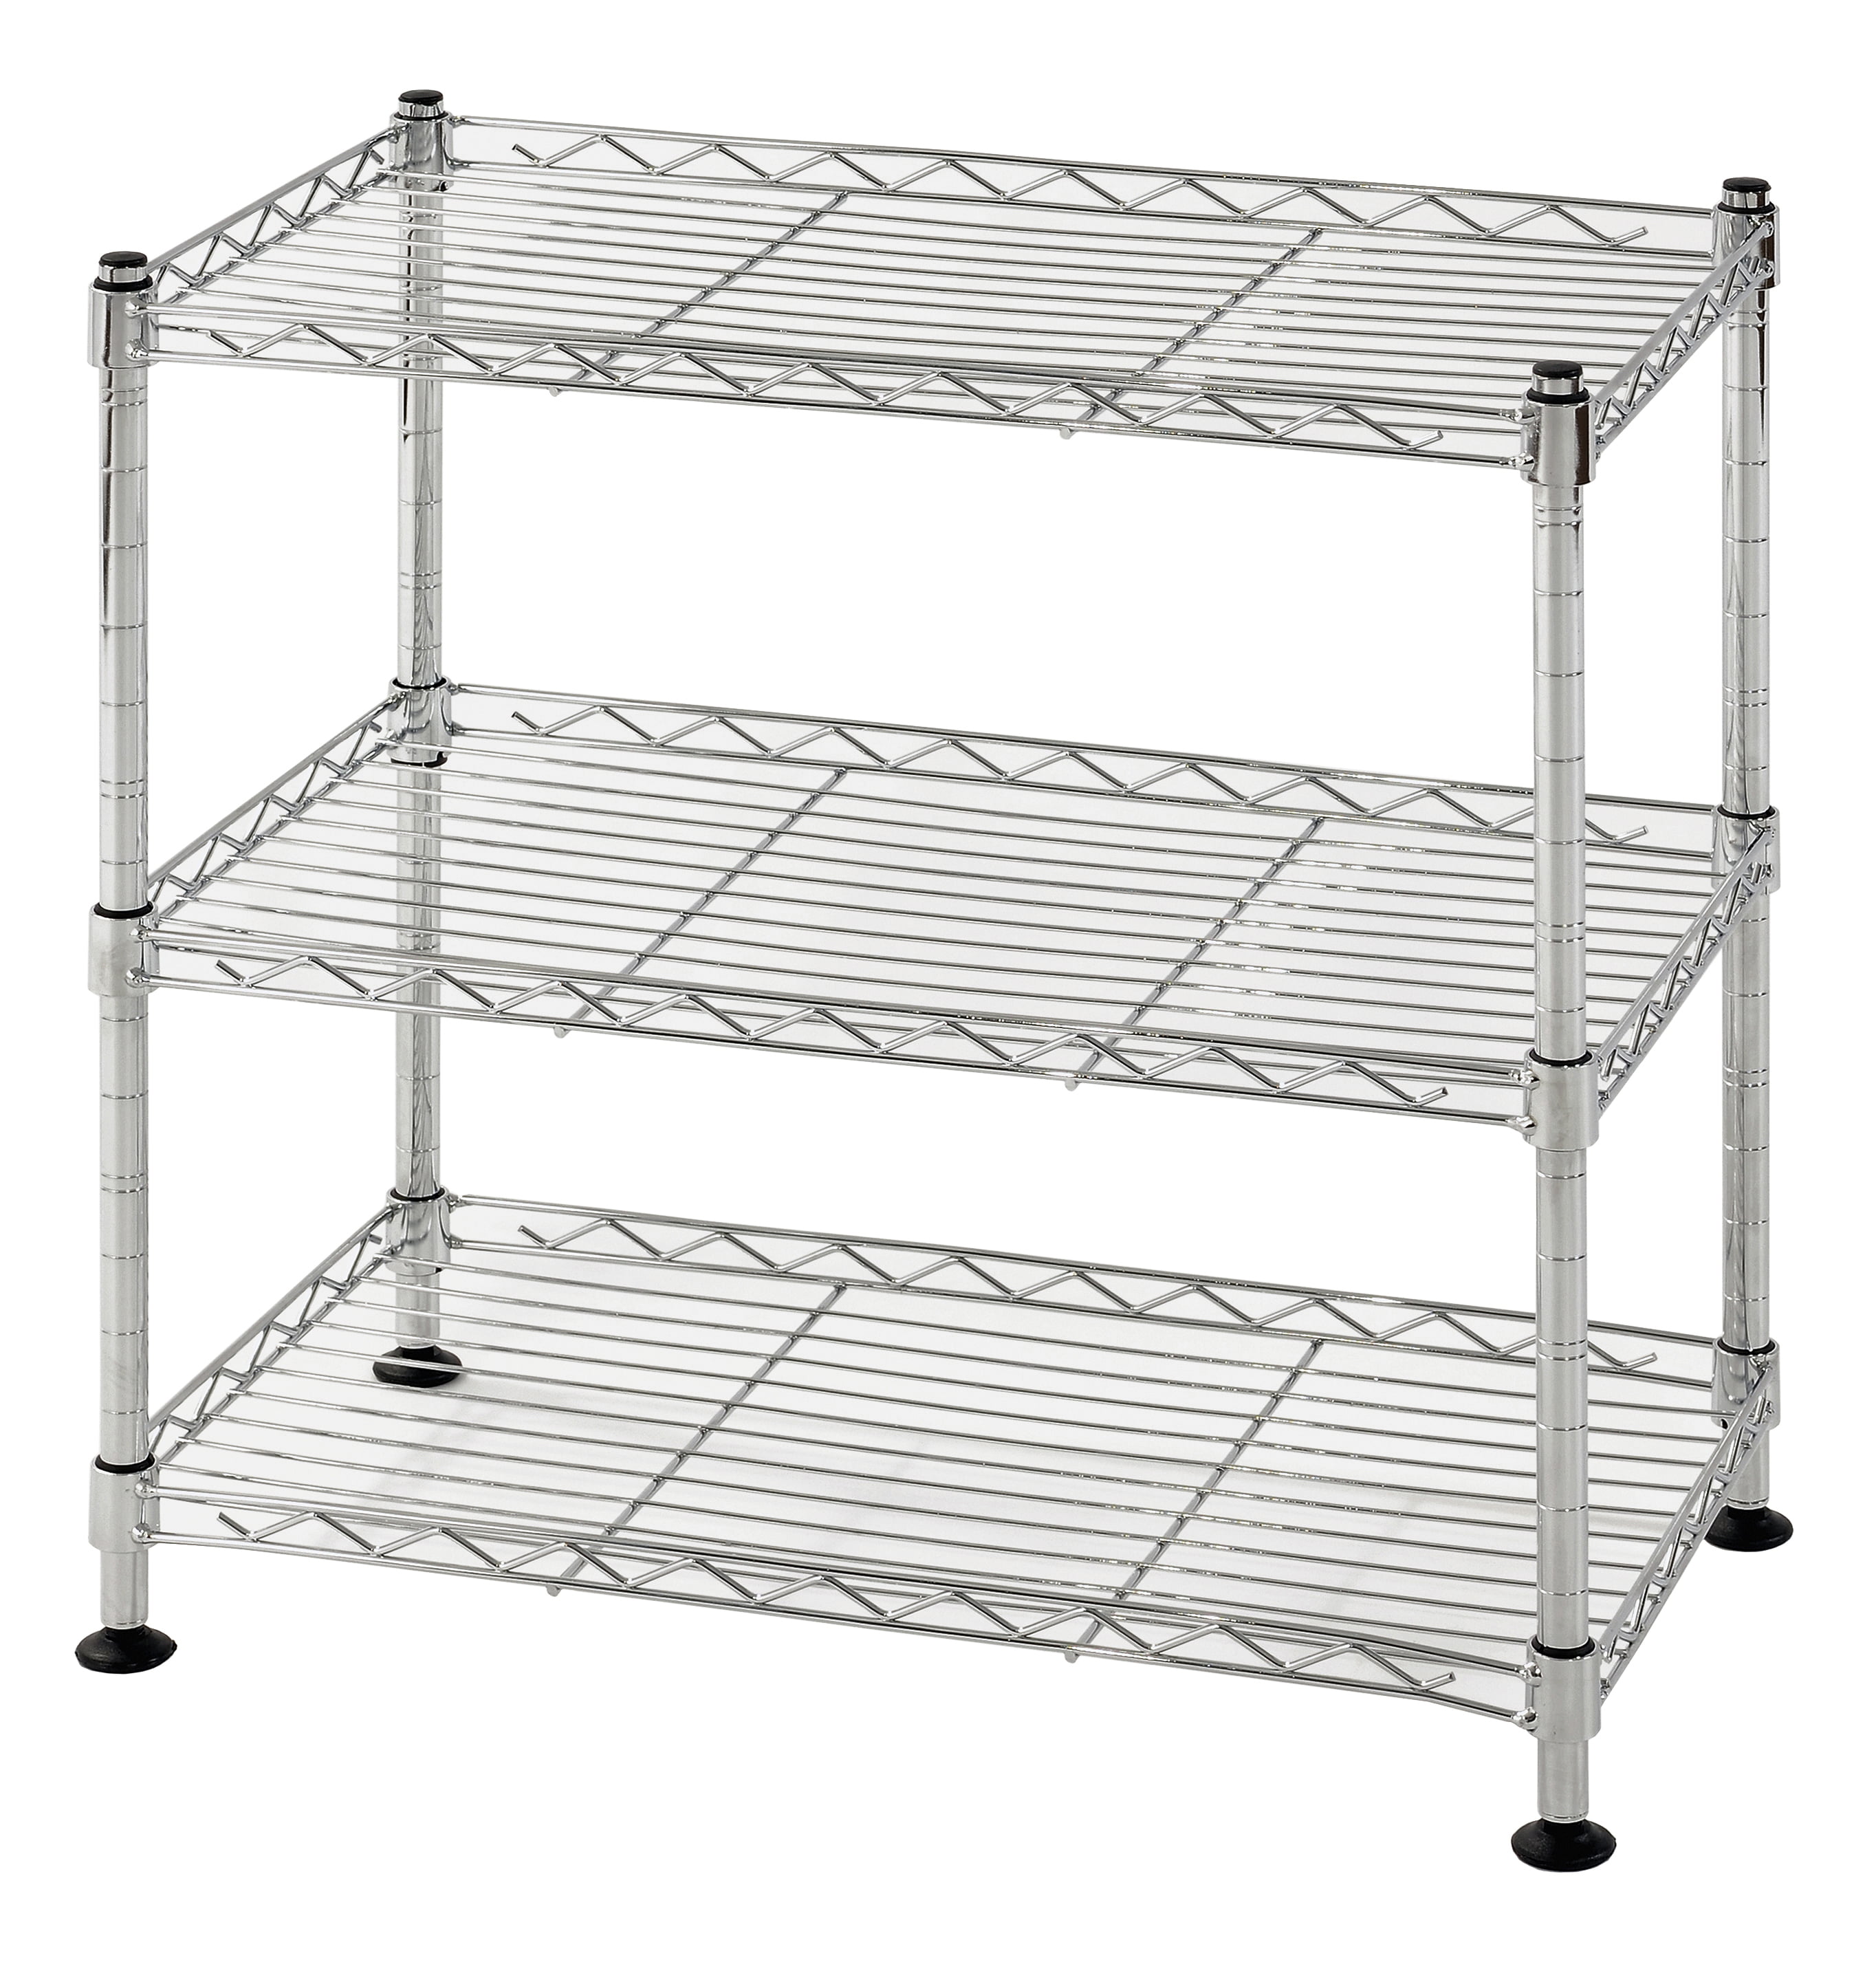 Metal Storage Garage Shelves 3 Tier Shelf Shelving Units Stainless Steel Wire